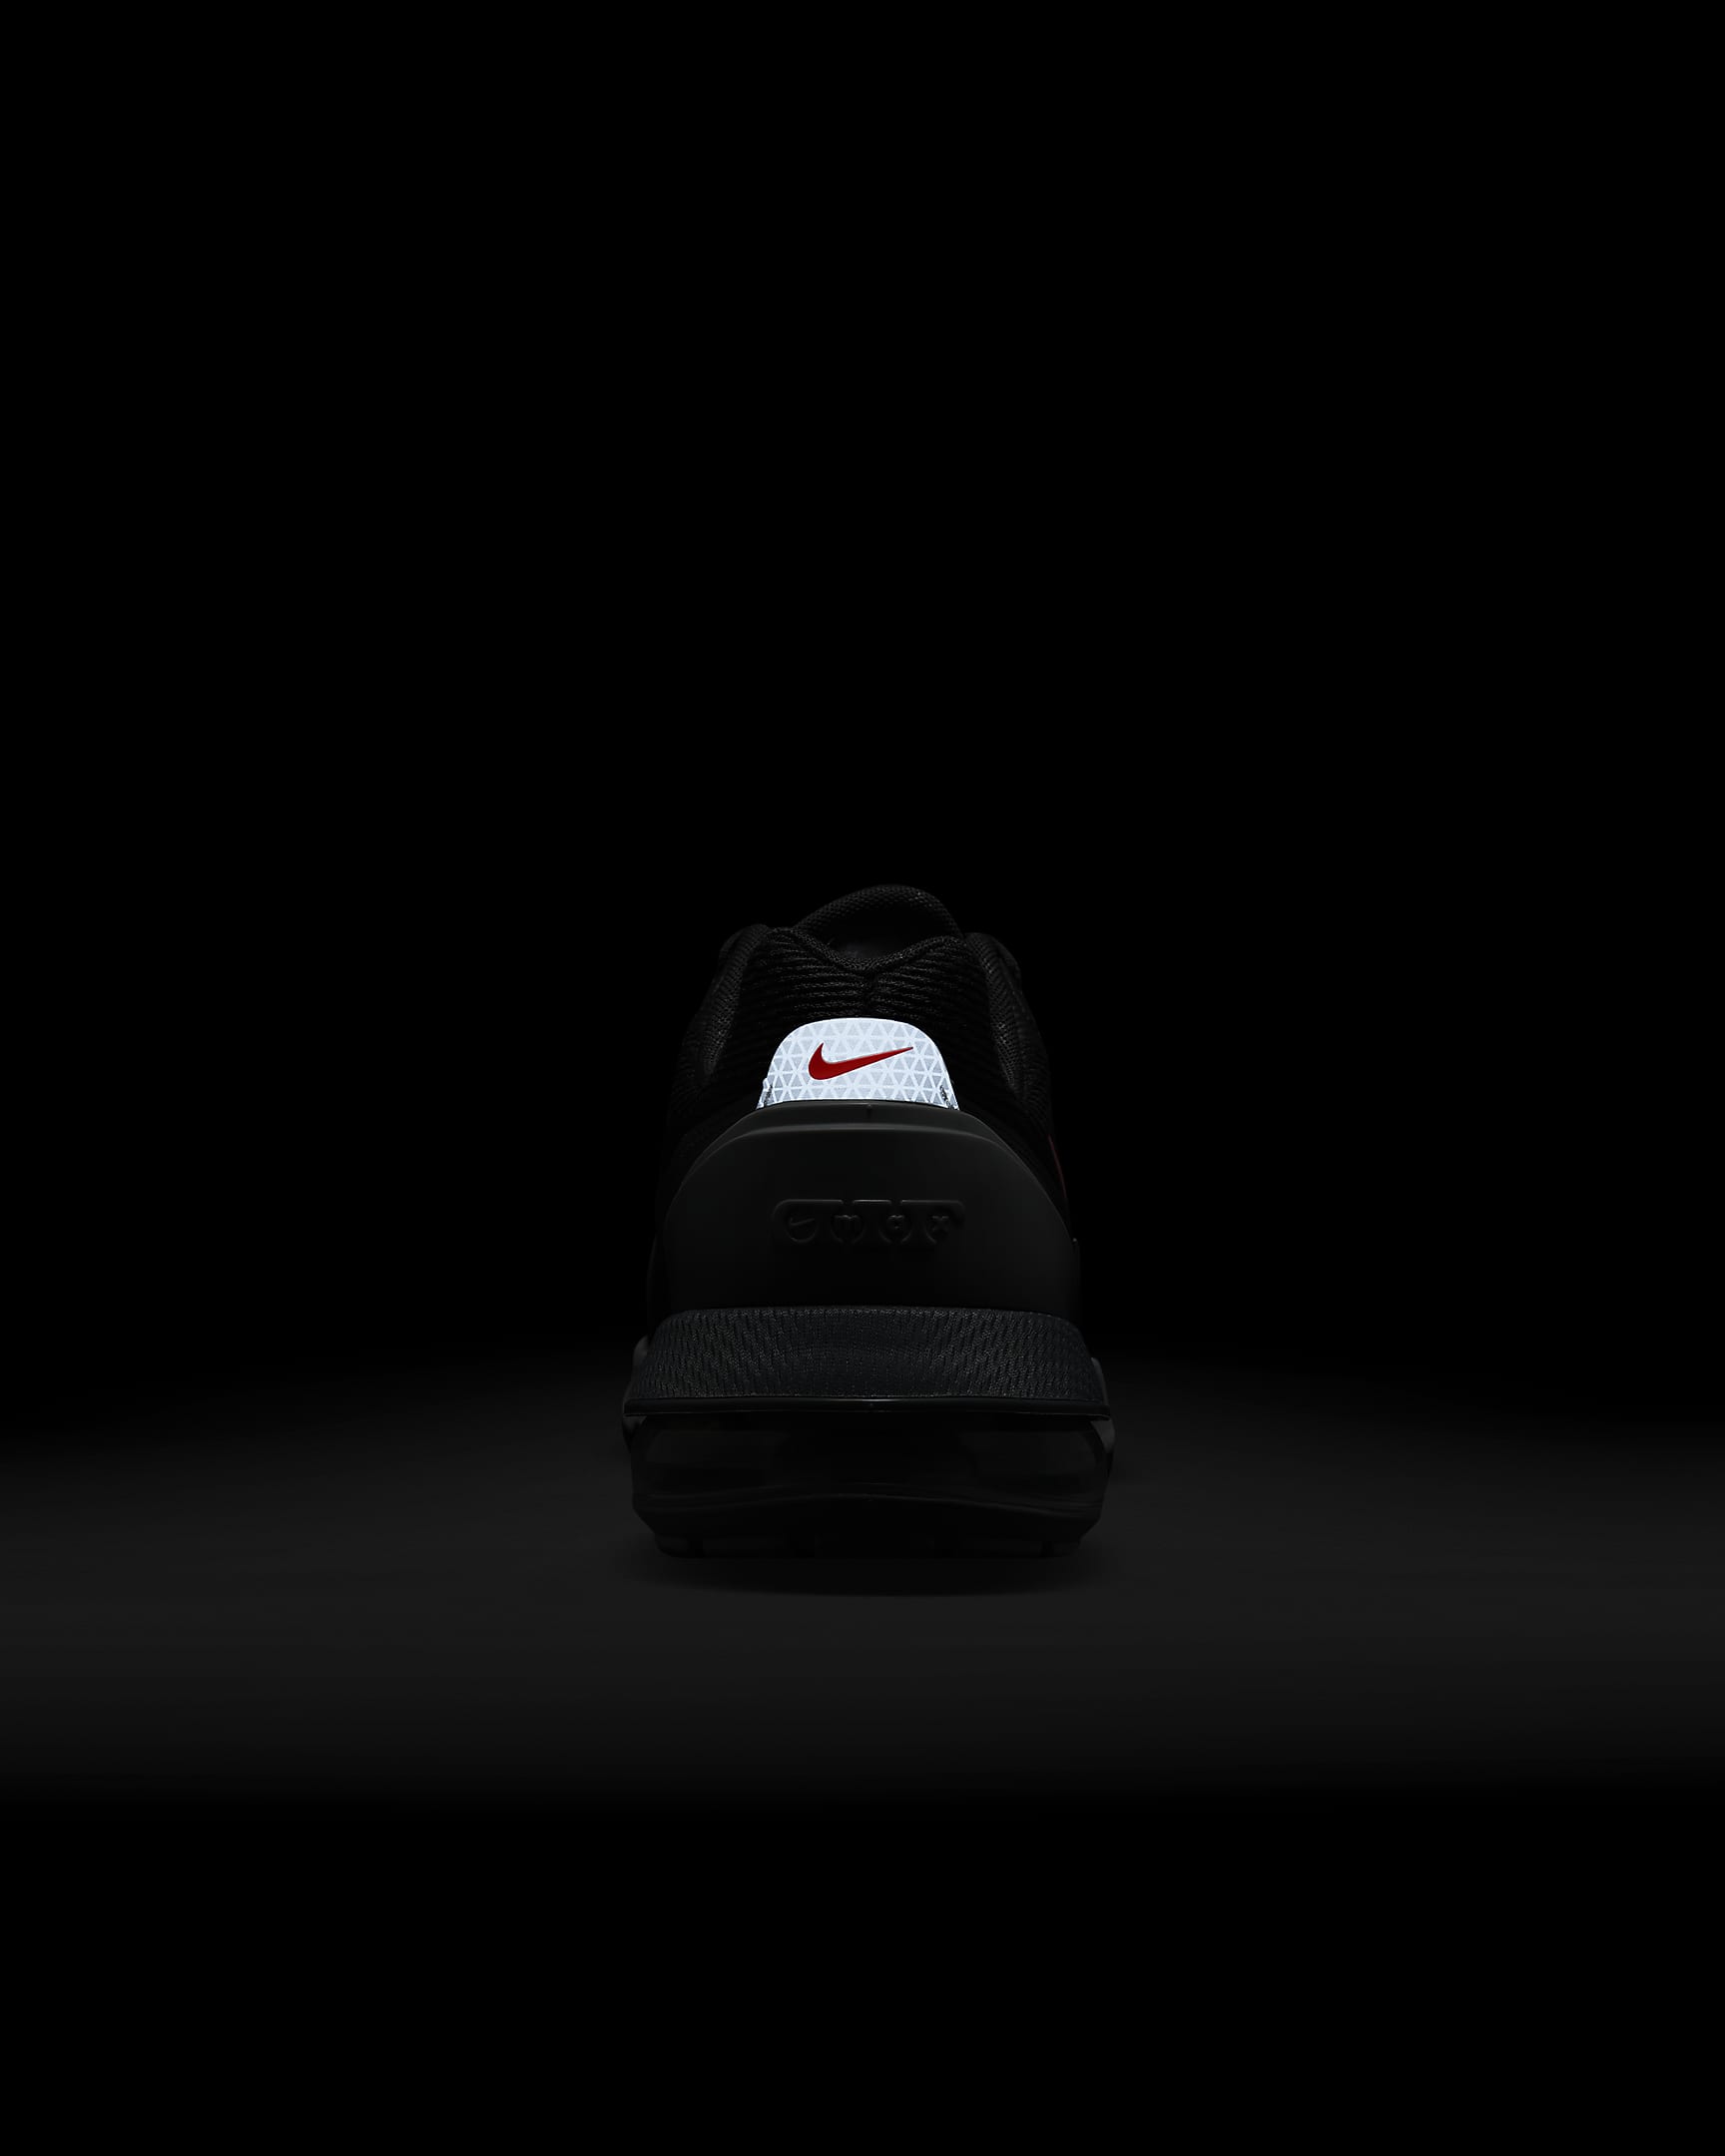 Nike Air Max Pulse herresko - Svart/Smoke Grey/Anthracite/Bright Crimson